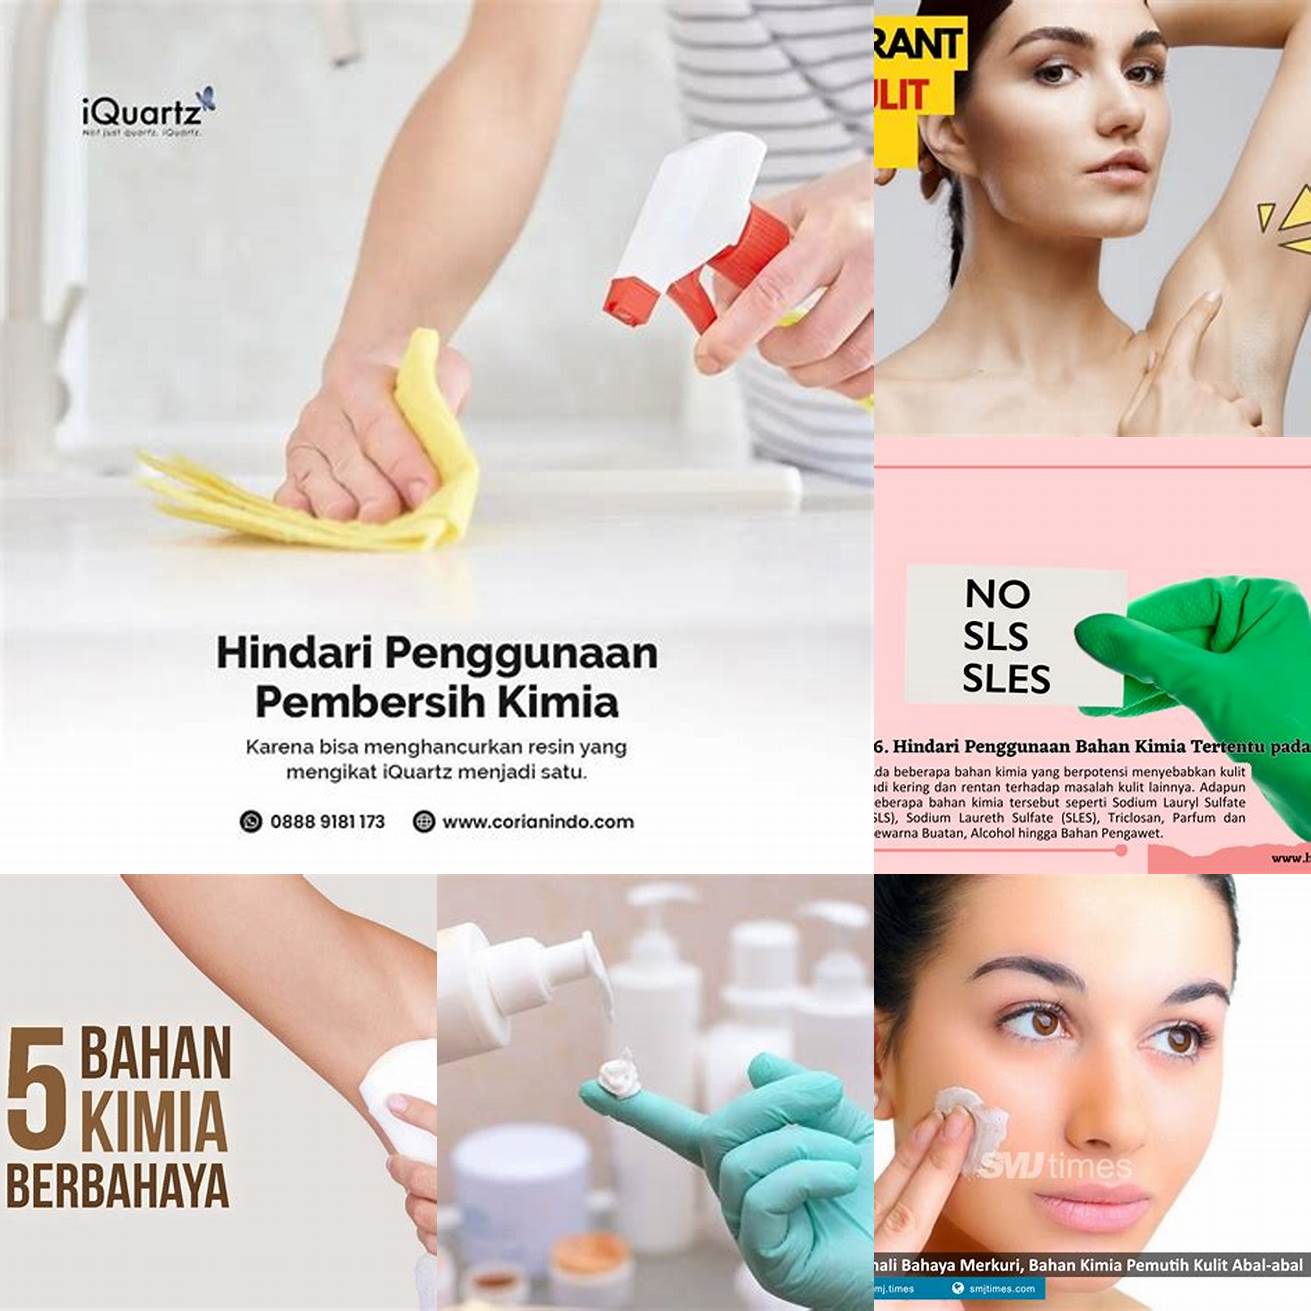 Hindari penggunaan bahan kimia pada kulit